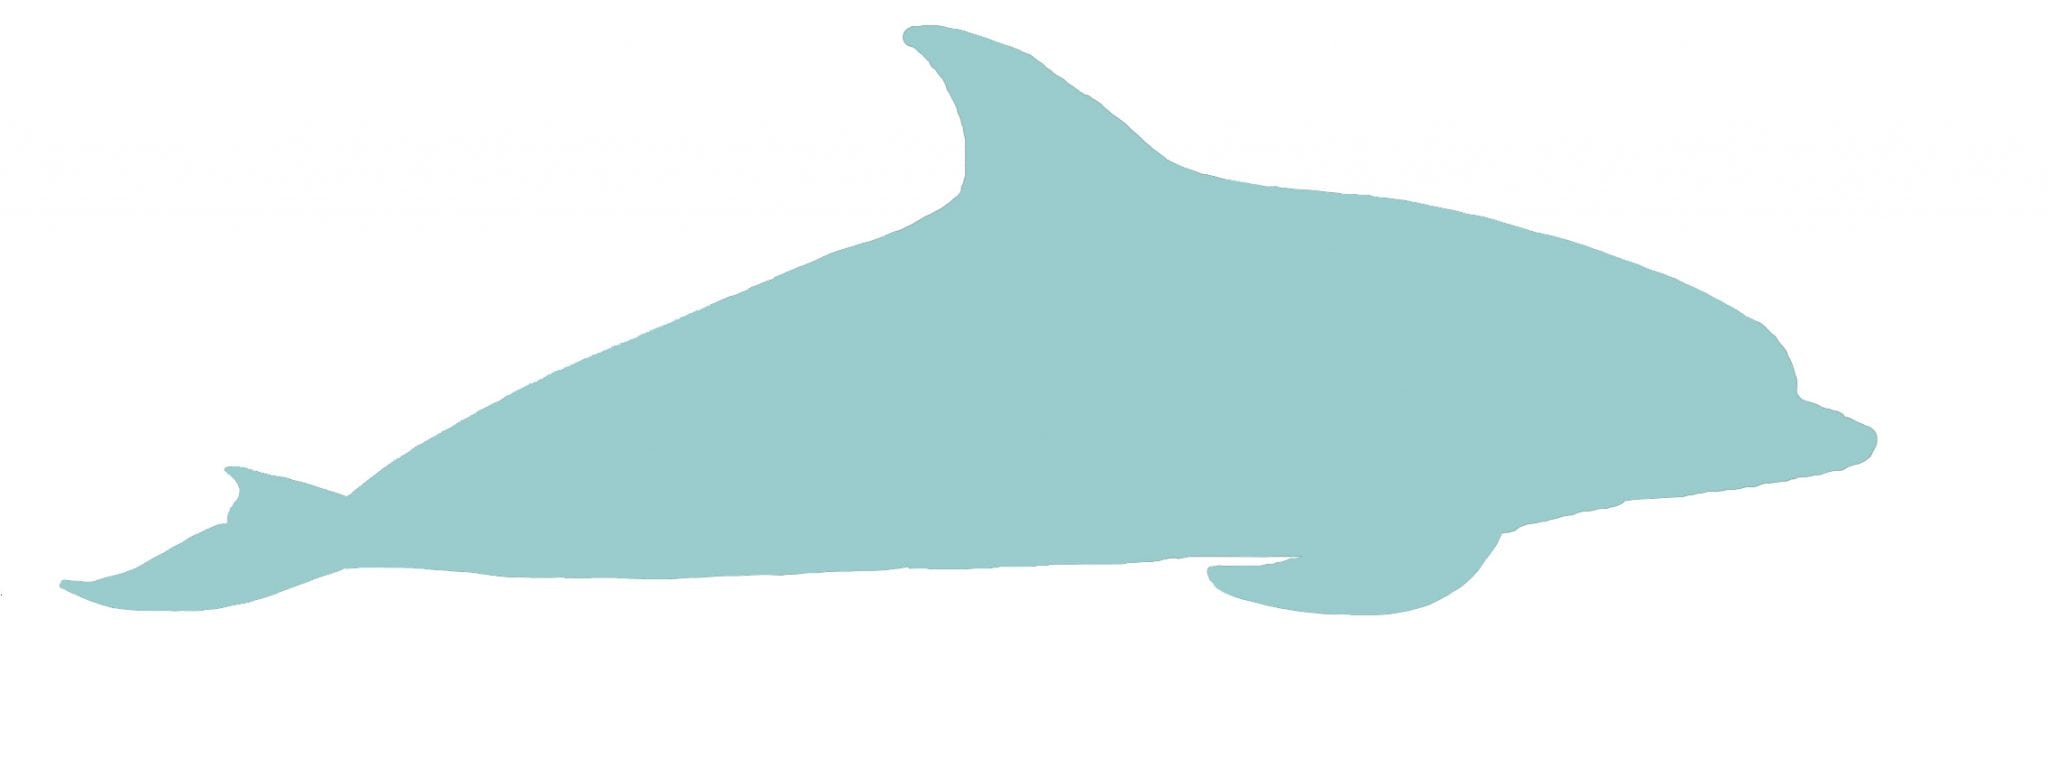 Oceanic dolphin silhouette